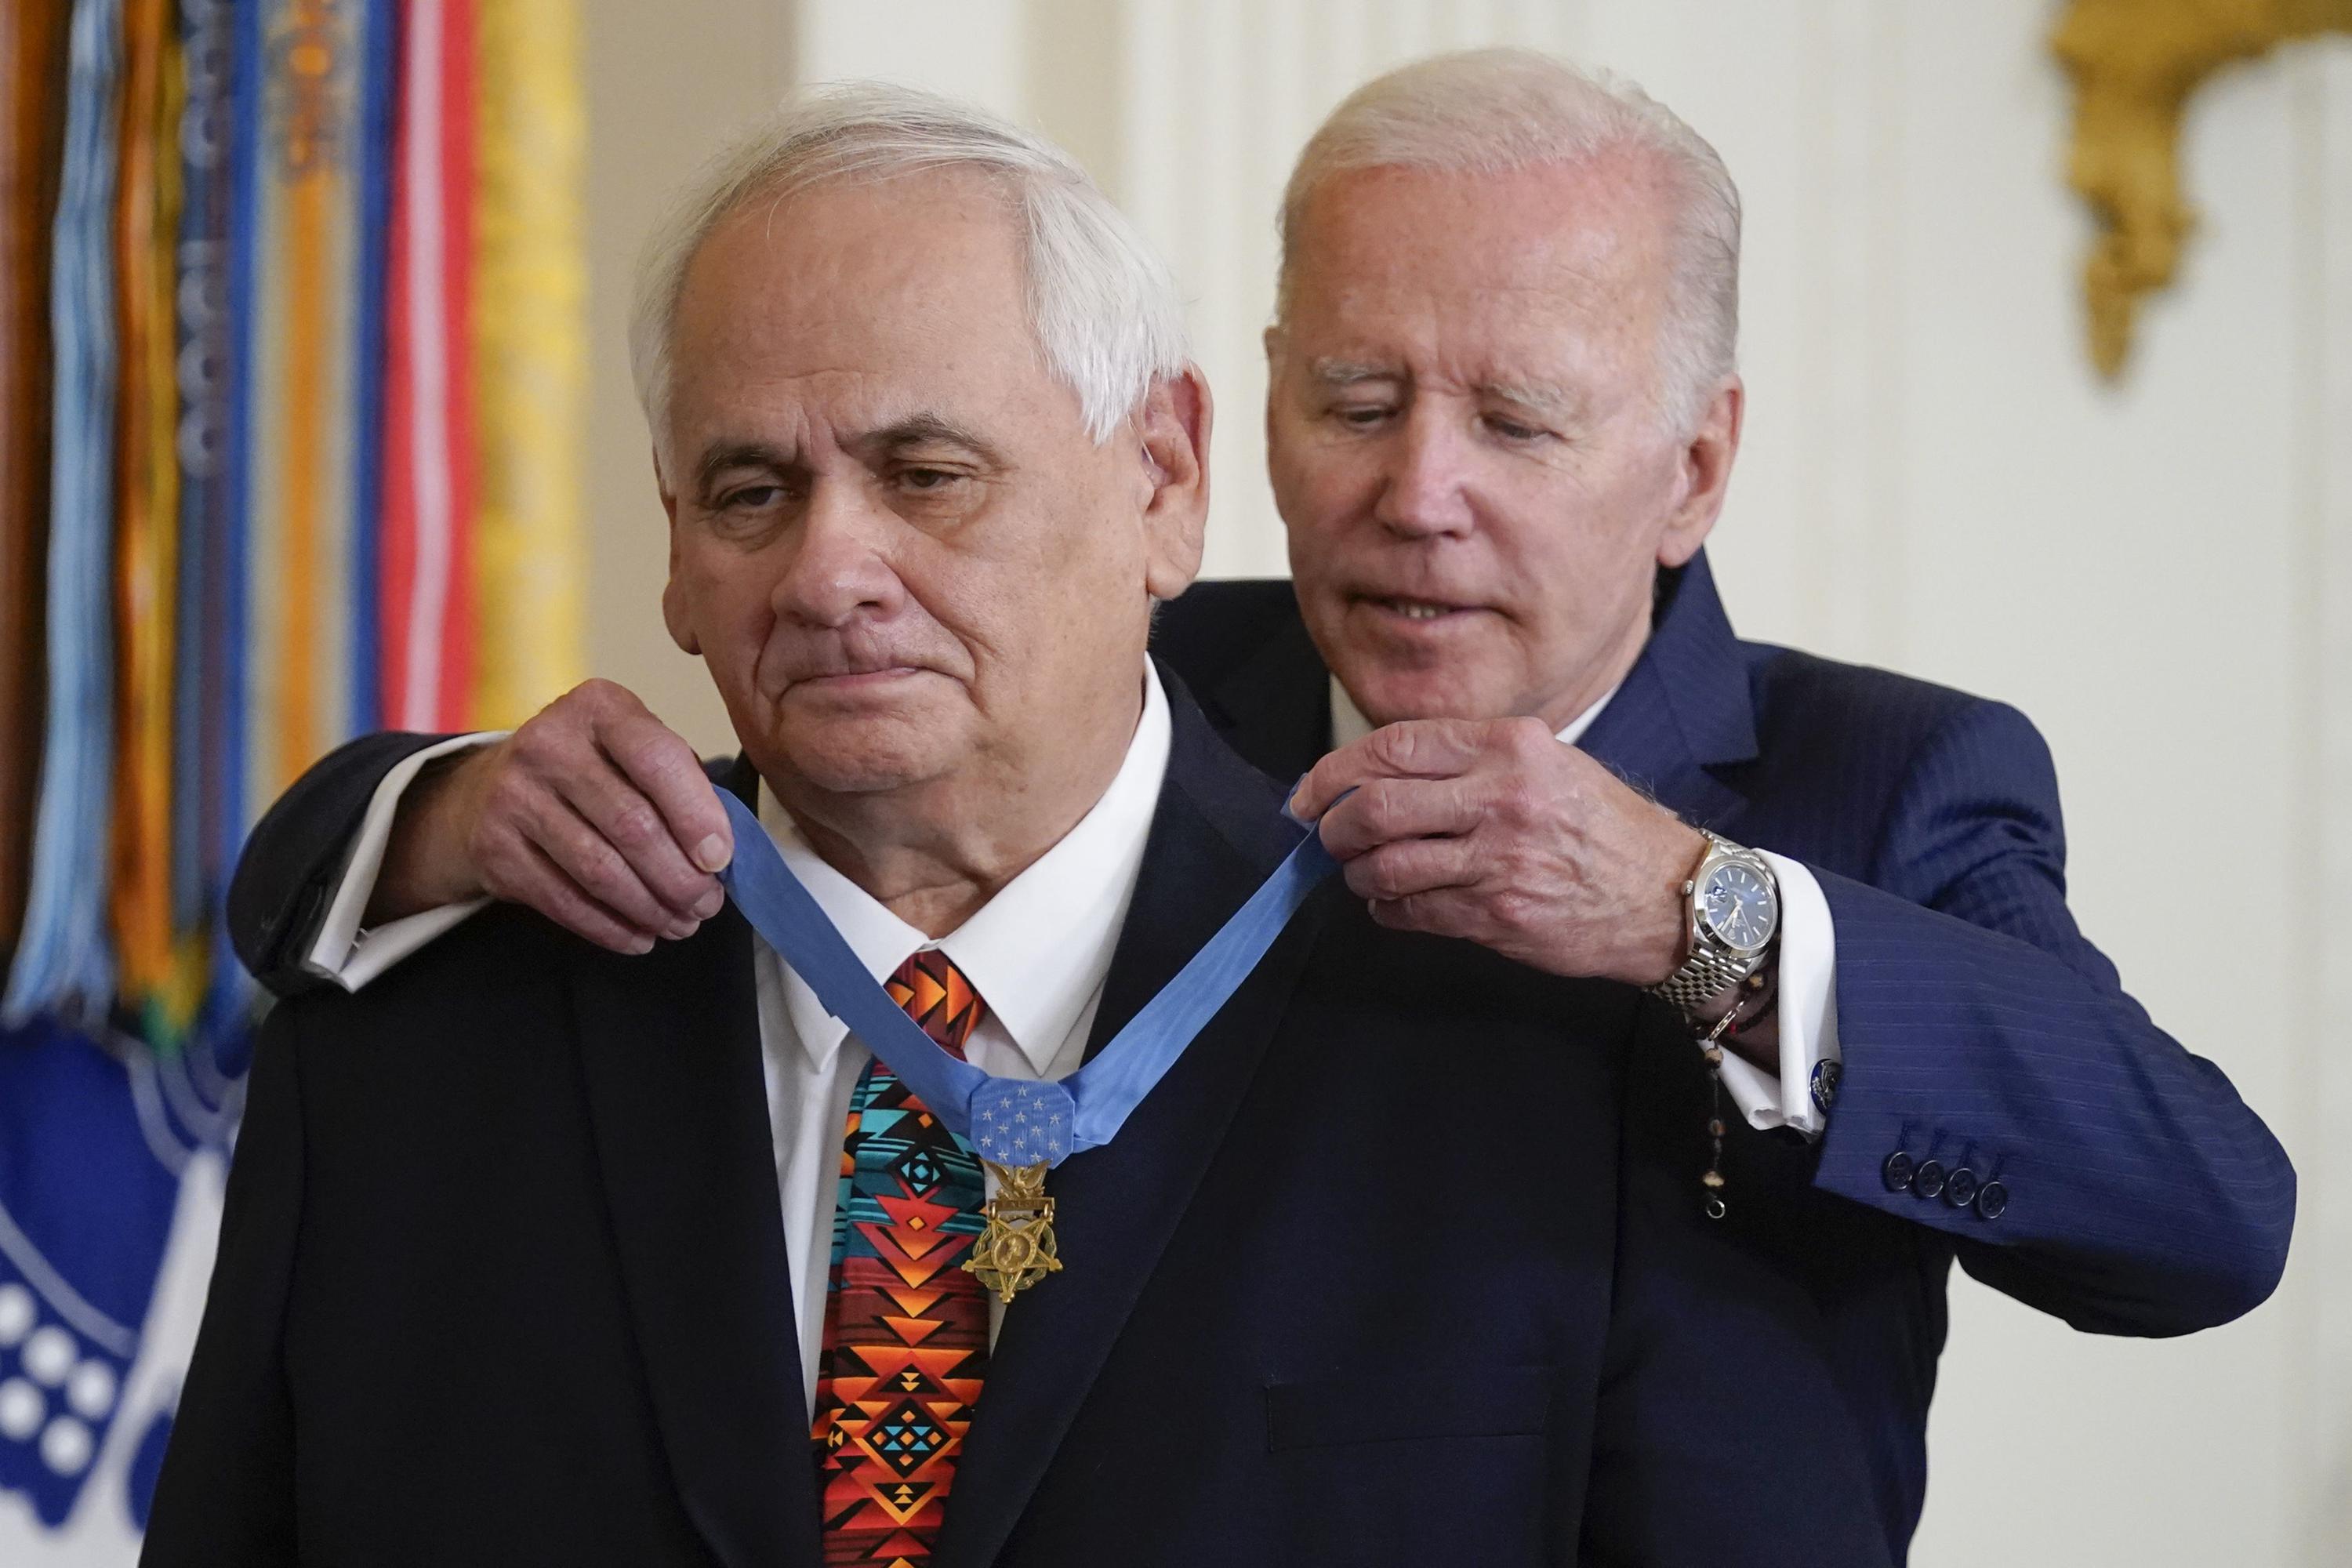 Biden not put of Honor on veteran backward | News